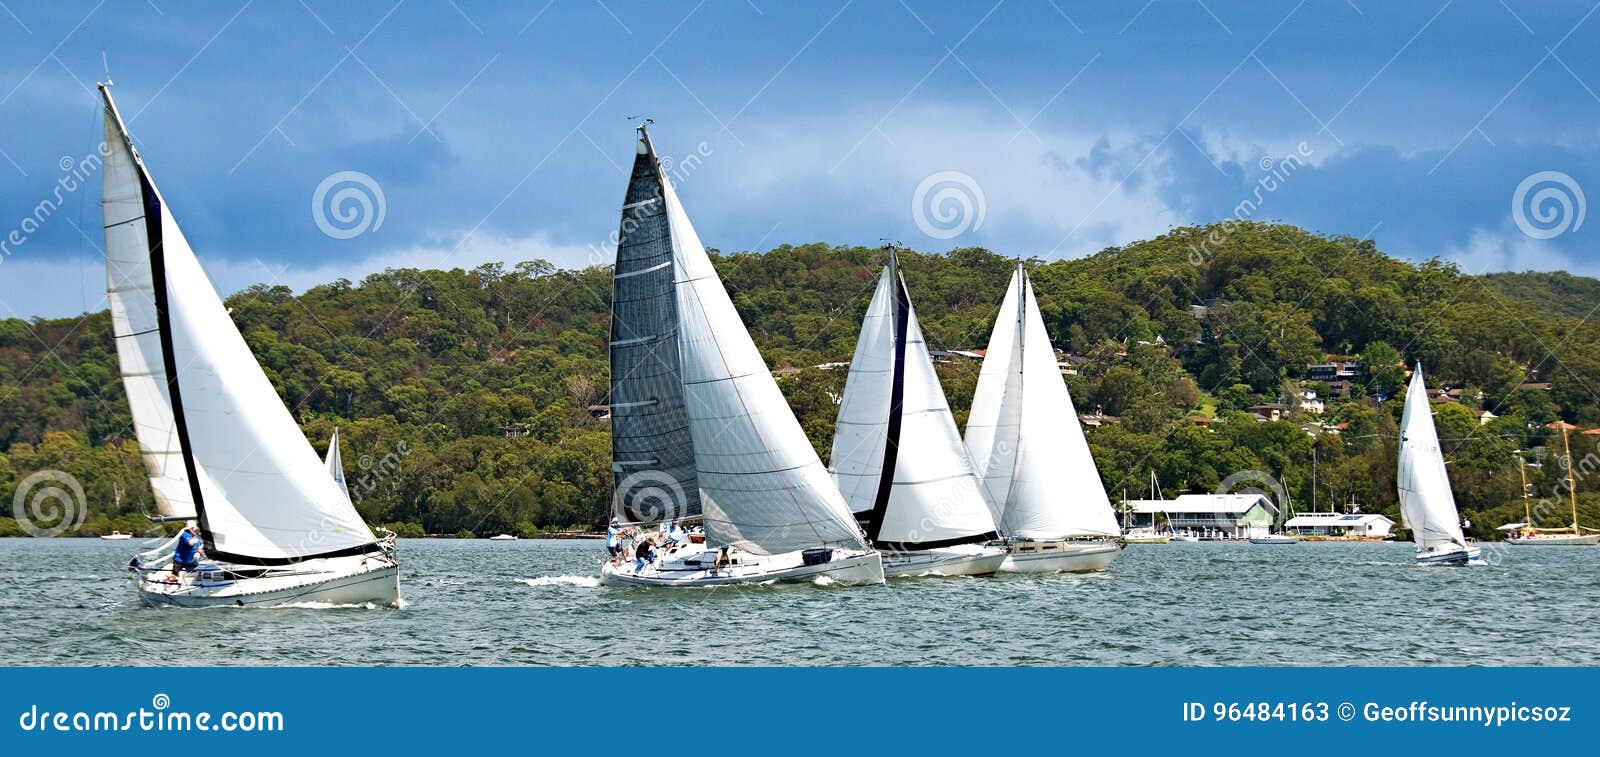 five monohull sailing yachts racing on brisbane water.